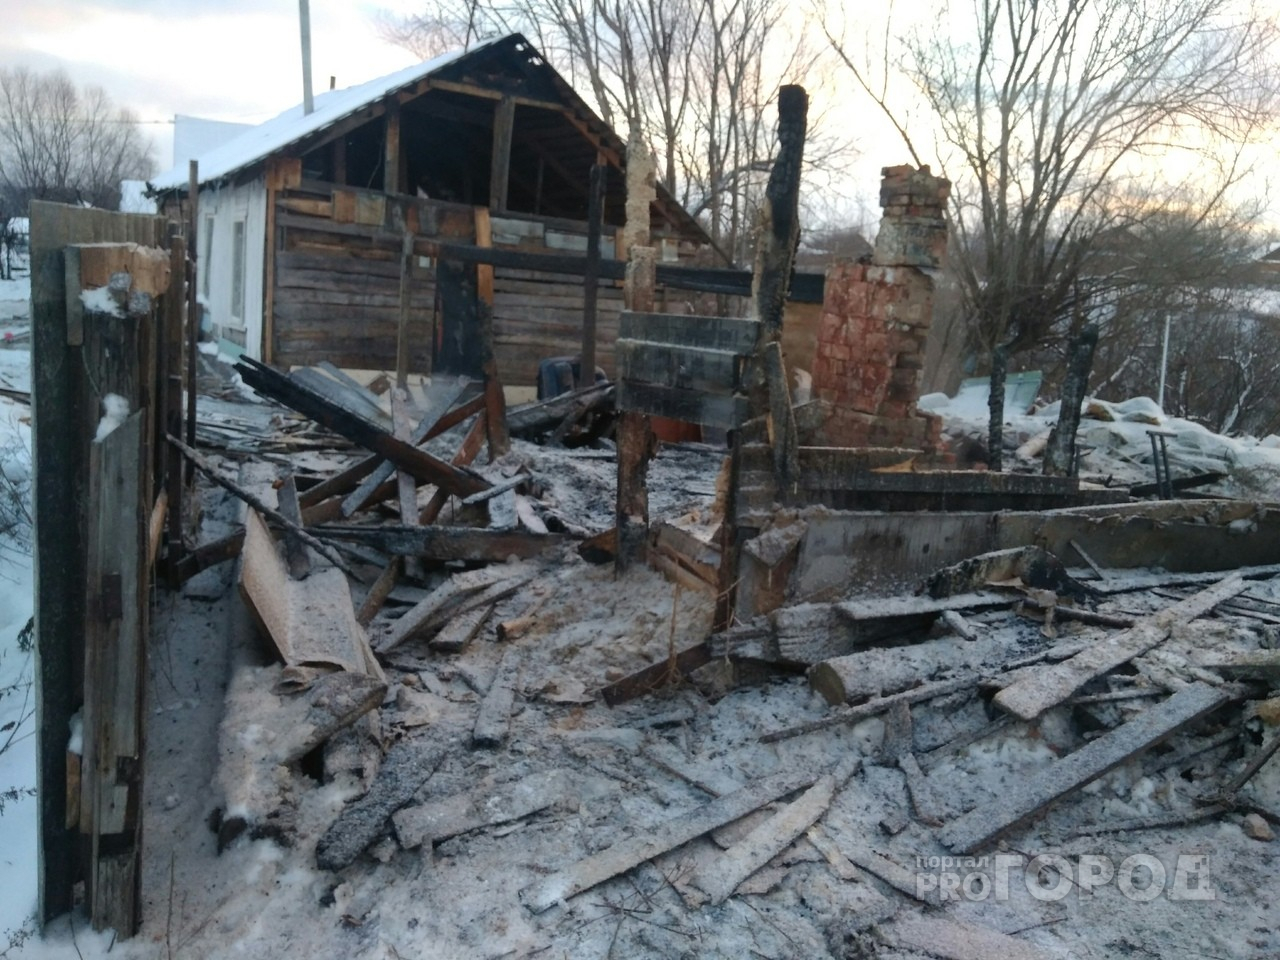 В Чебоксарах на пожаре в доме без адреса скончался 42-летний мужчина